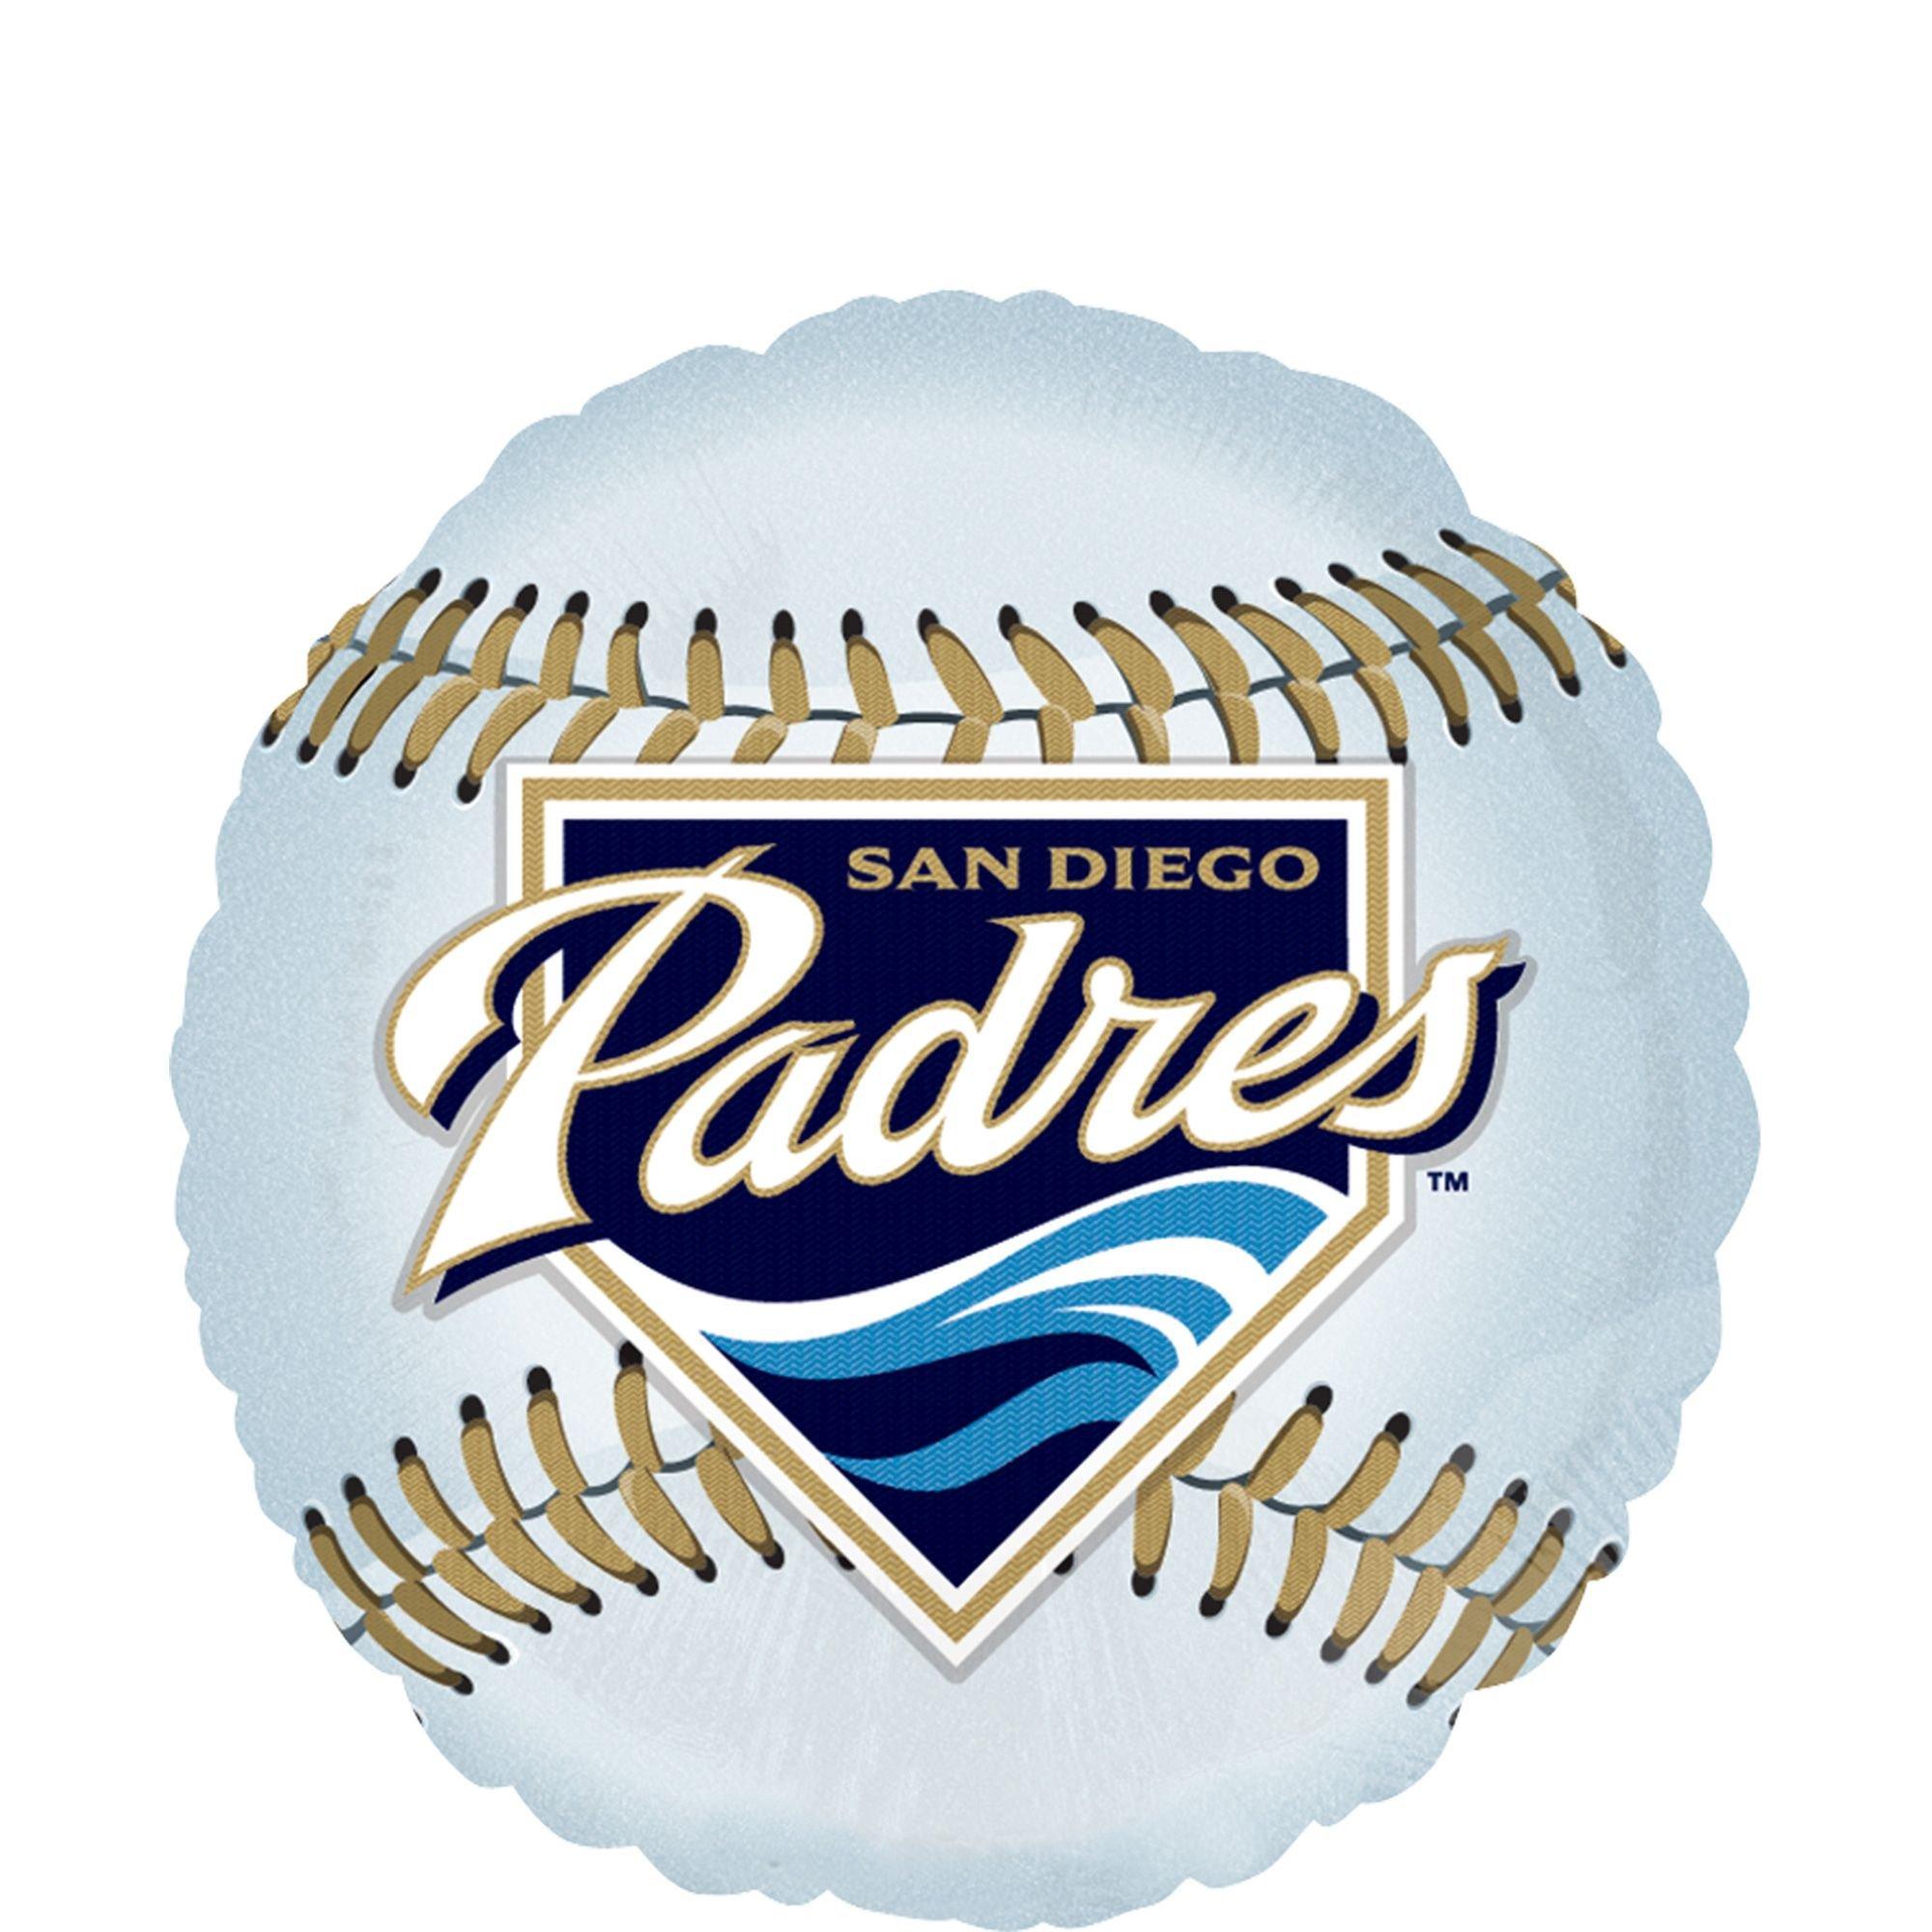 San Diego Padres Balloon 17in - Baseball